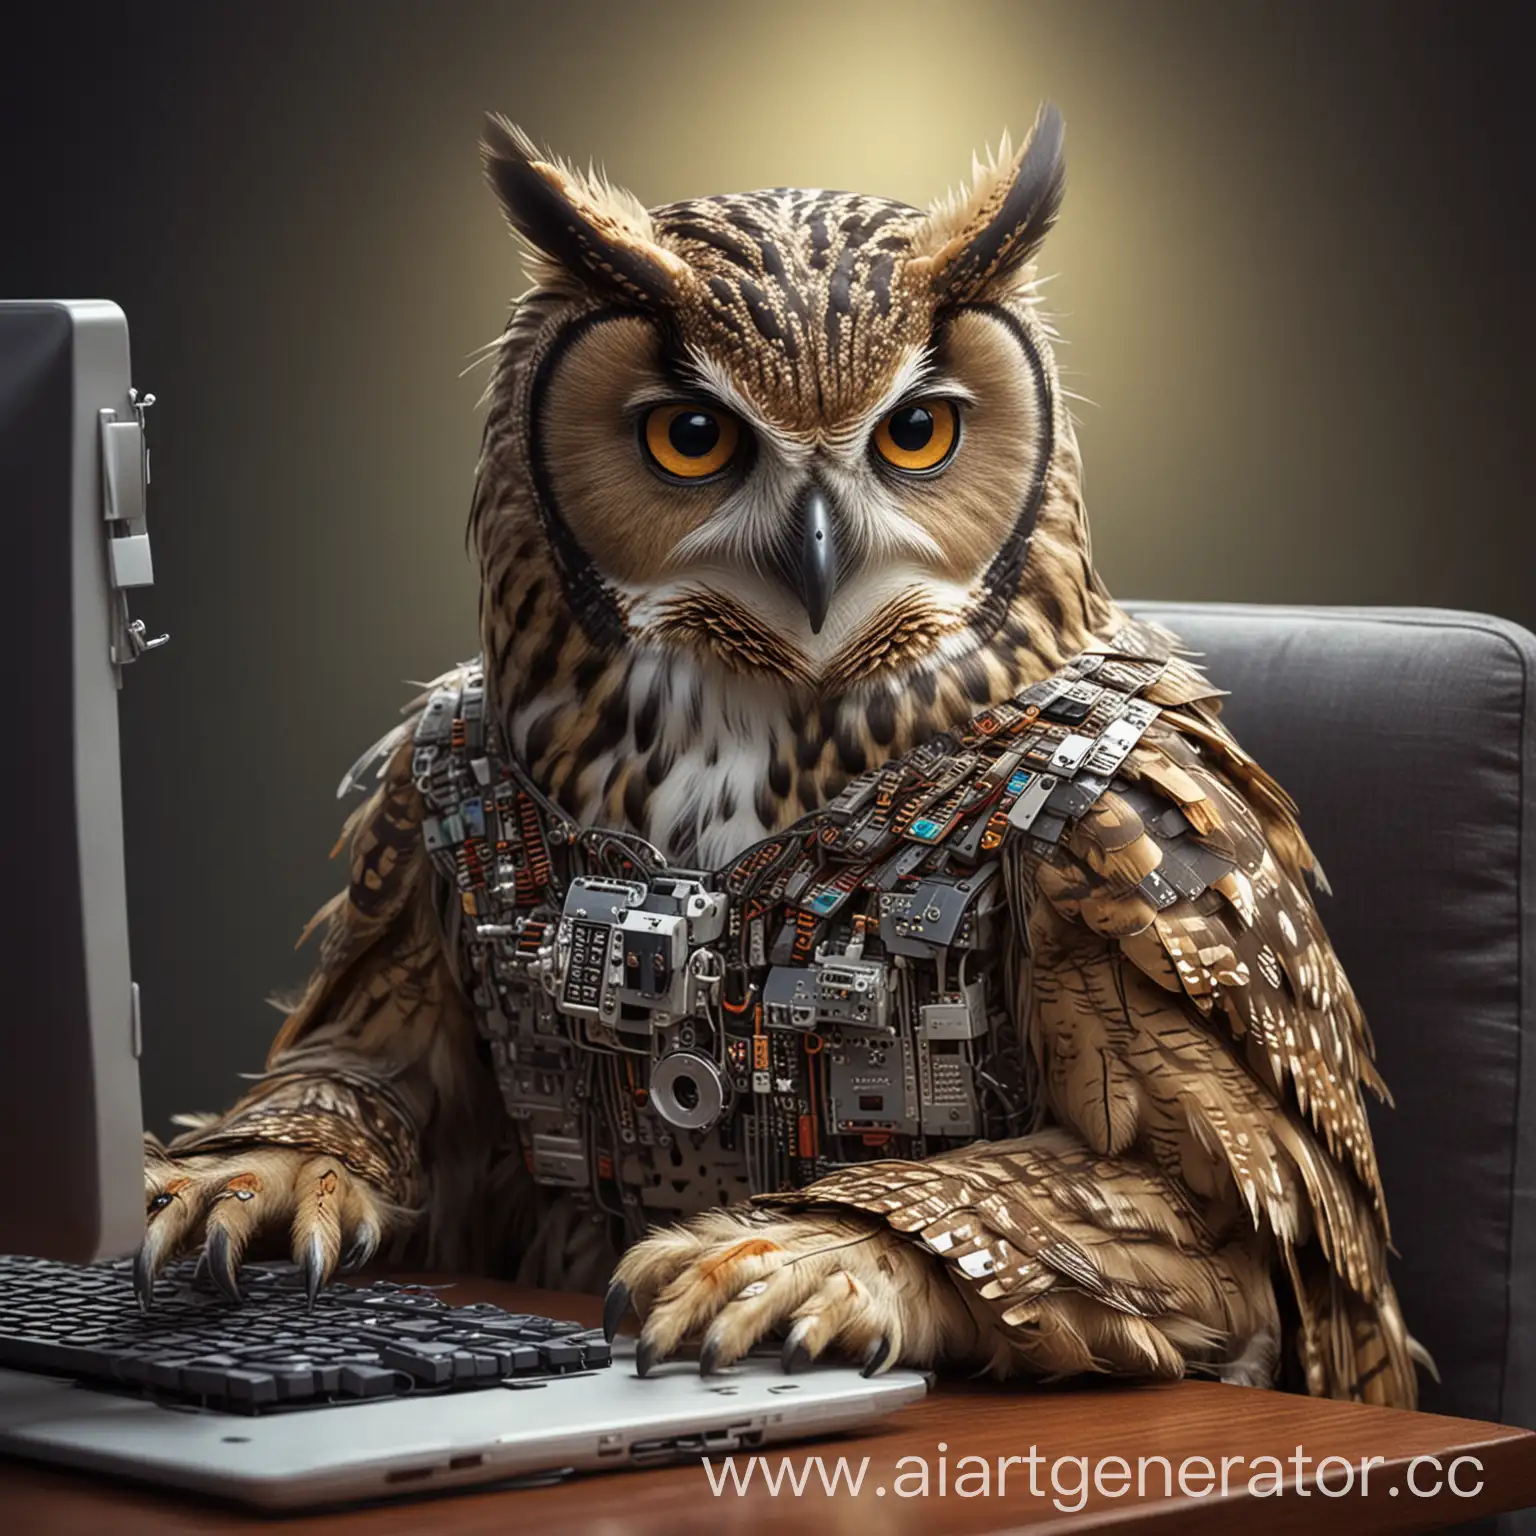 Intelligent-Owl-Programming-in-a-Digital-World